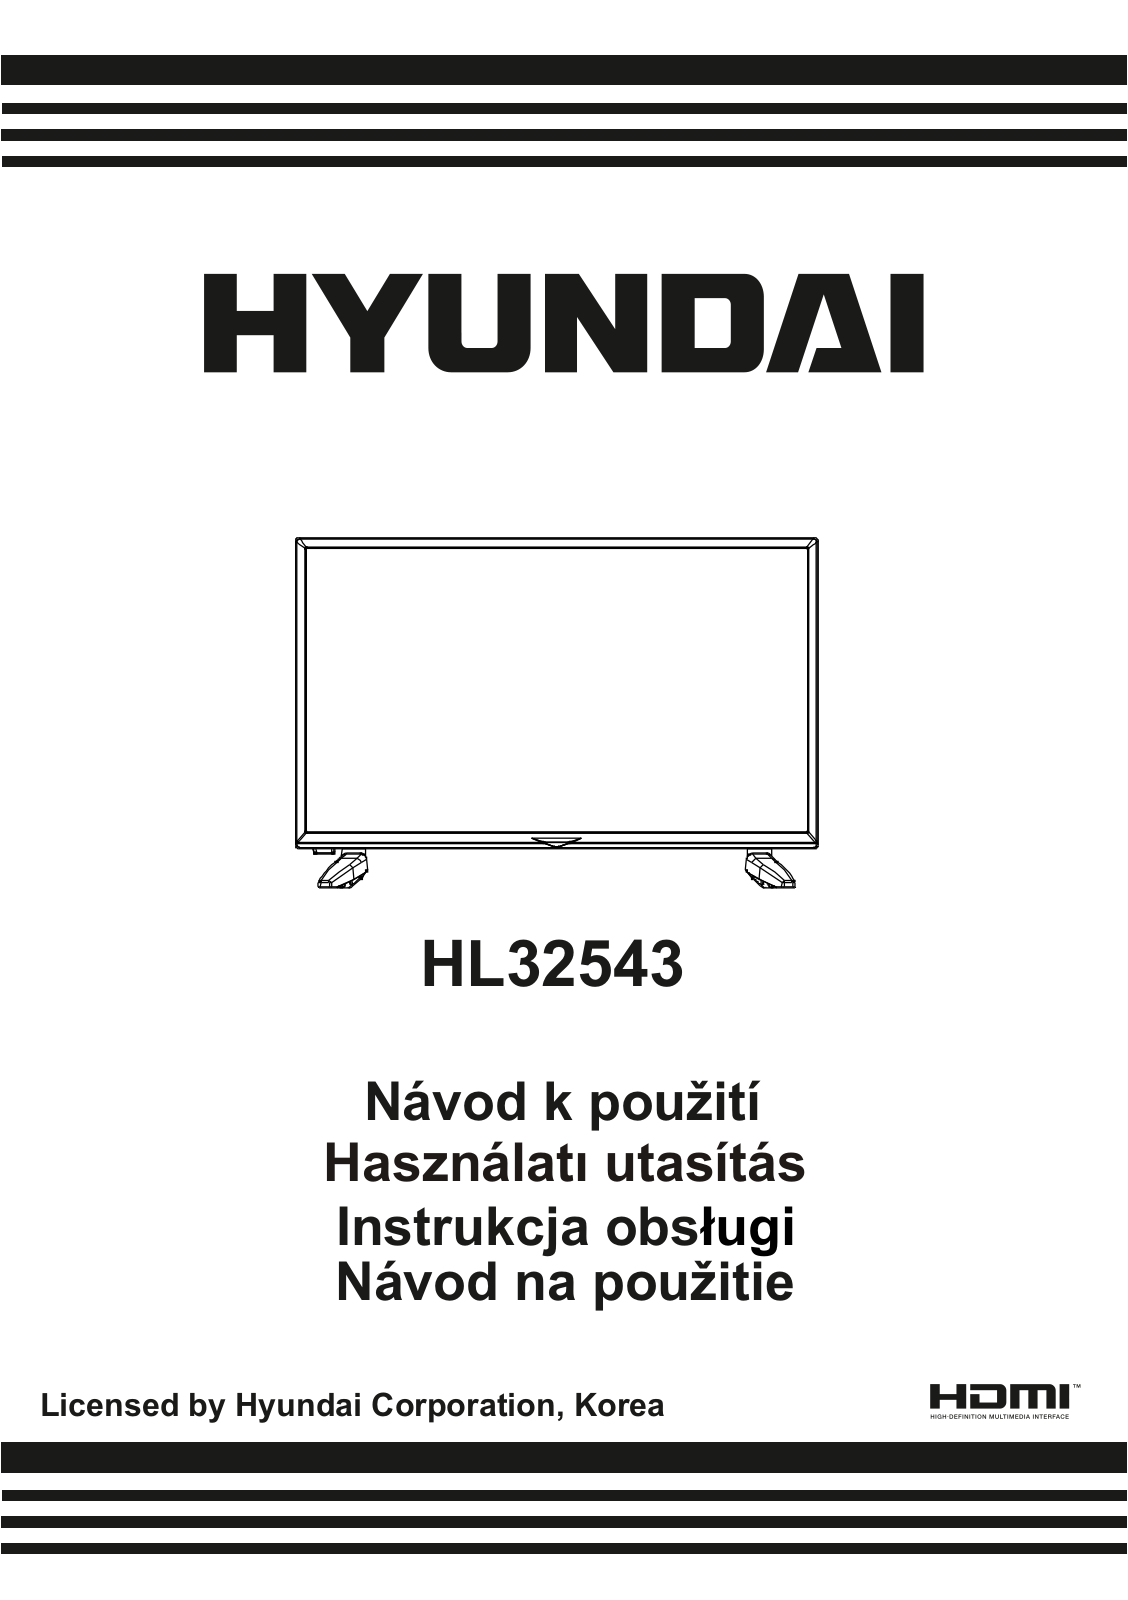 Hyundai HL 32543 Manual